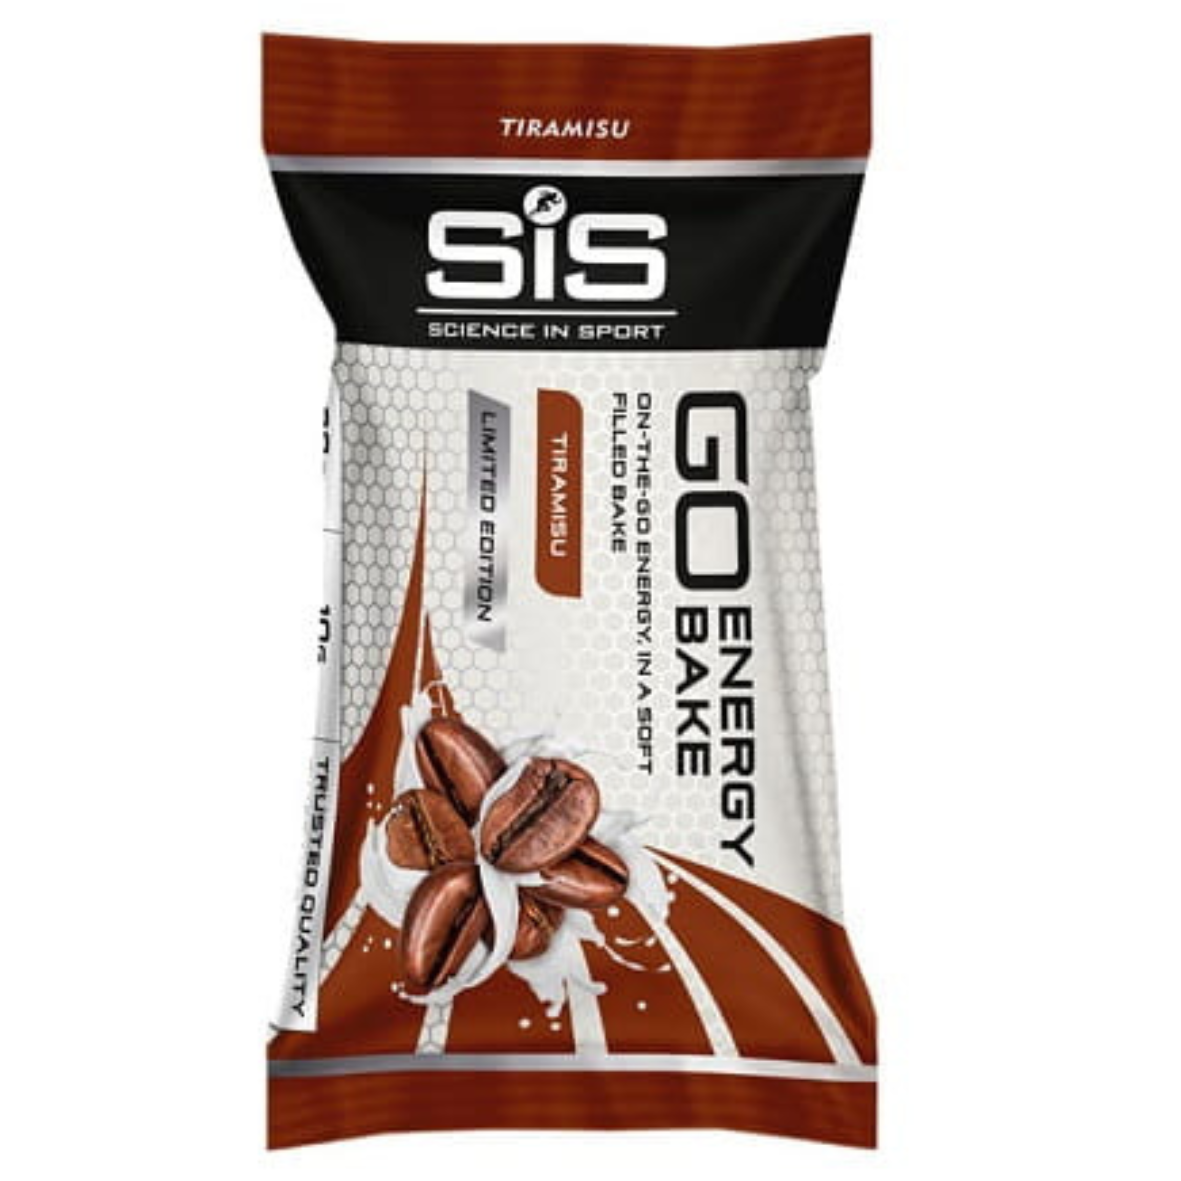 Science In Sport (SIS) - Go Energy Bake Bars - Tiramisu (50g)